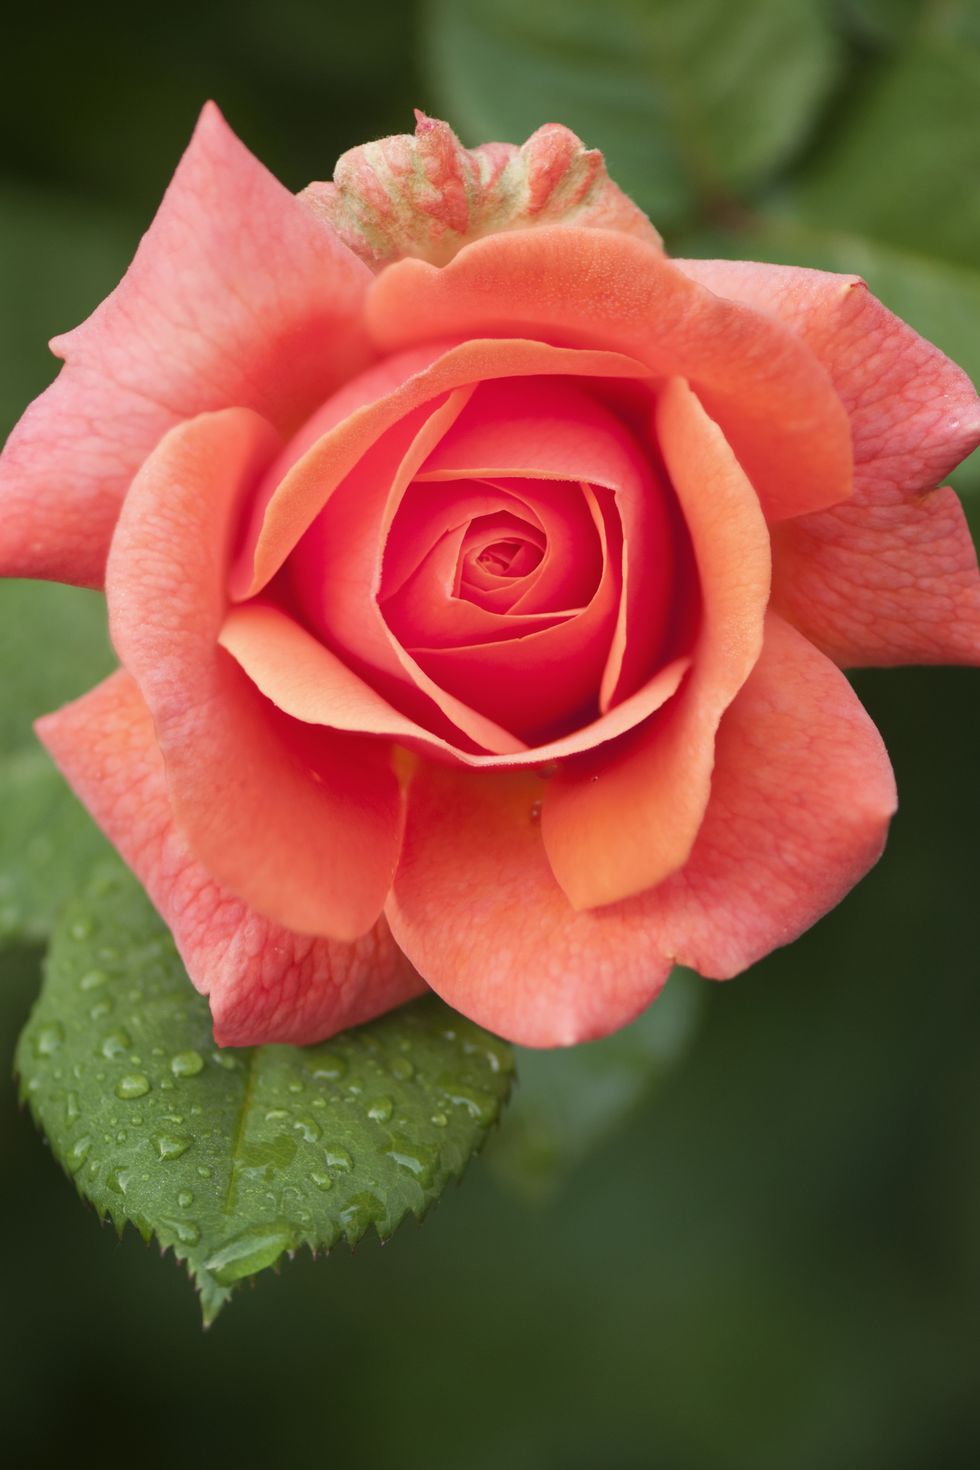 Petal, Flower, Red, Pink, Botany, Flowering plant, Terrestrial plant, Rose, Rose family, Annual plant, 